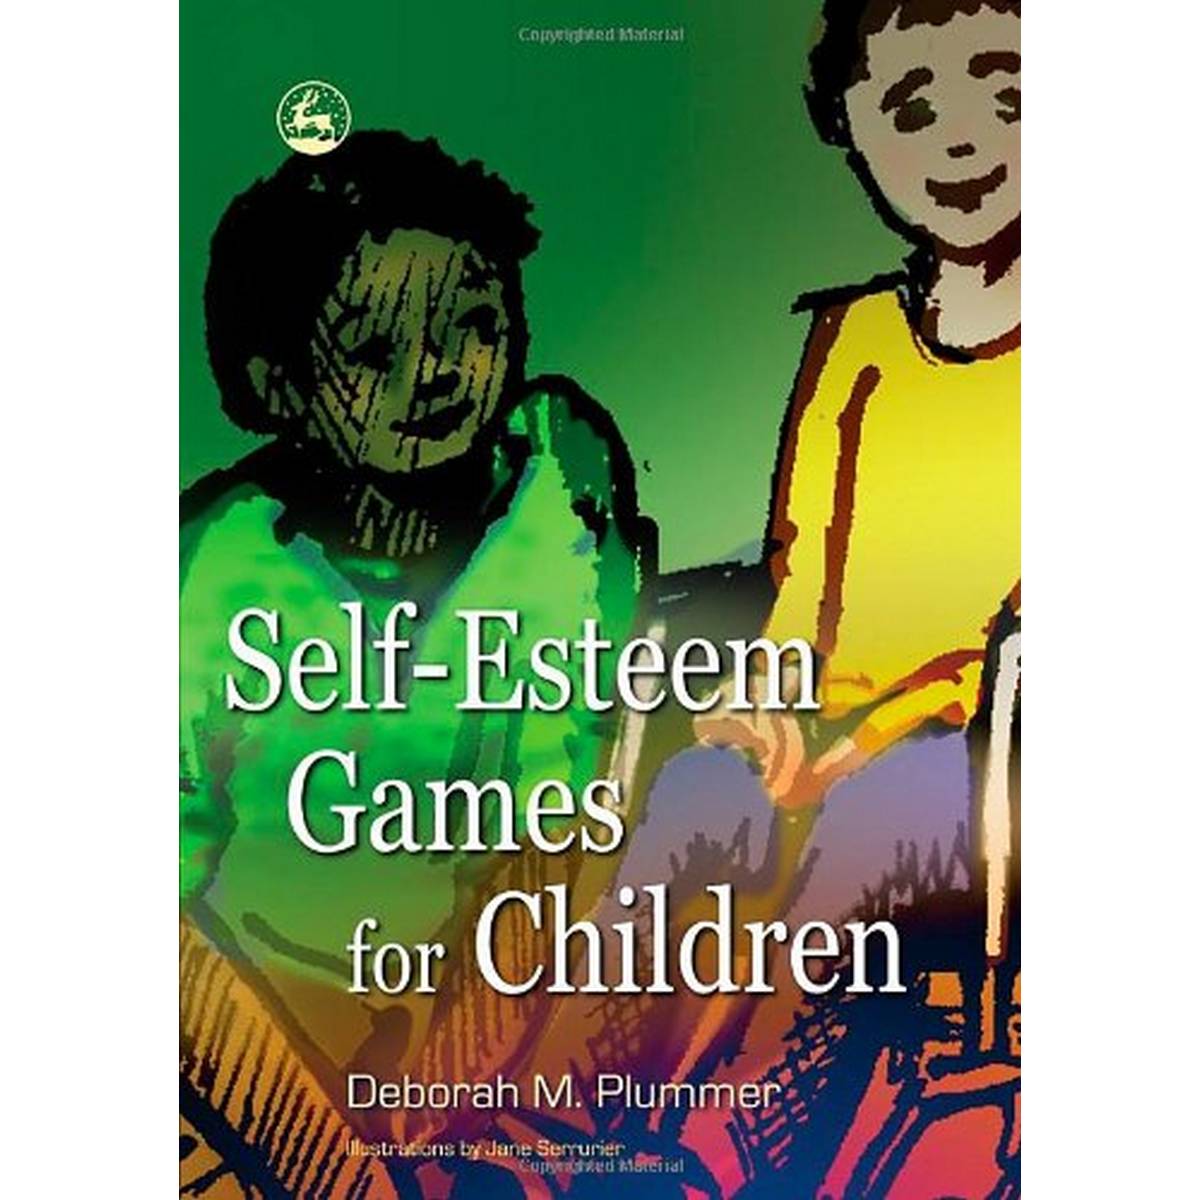 Self-Esteem Games for Children